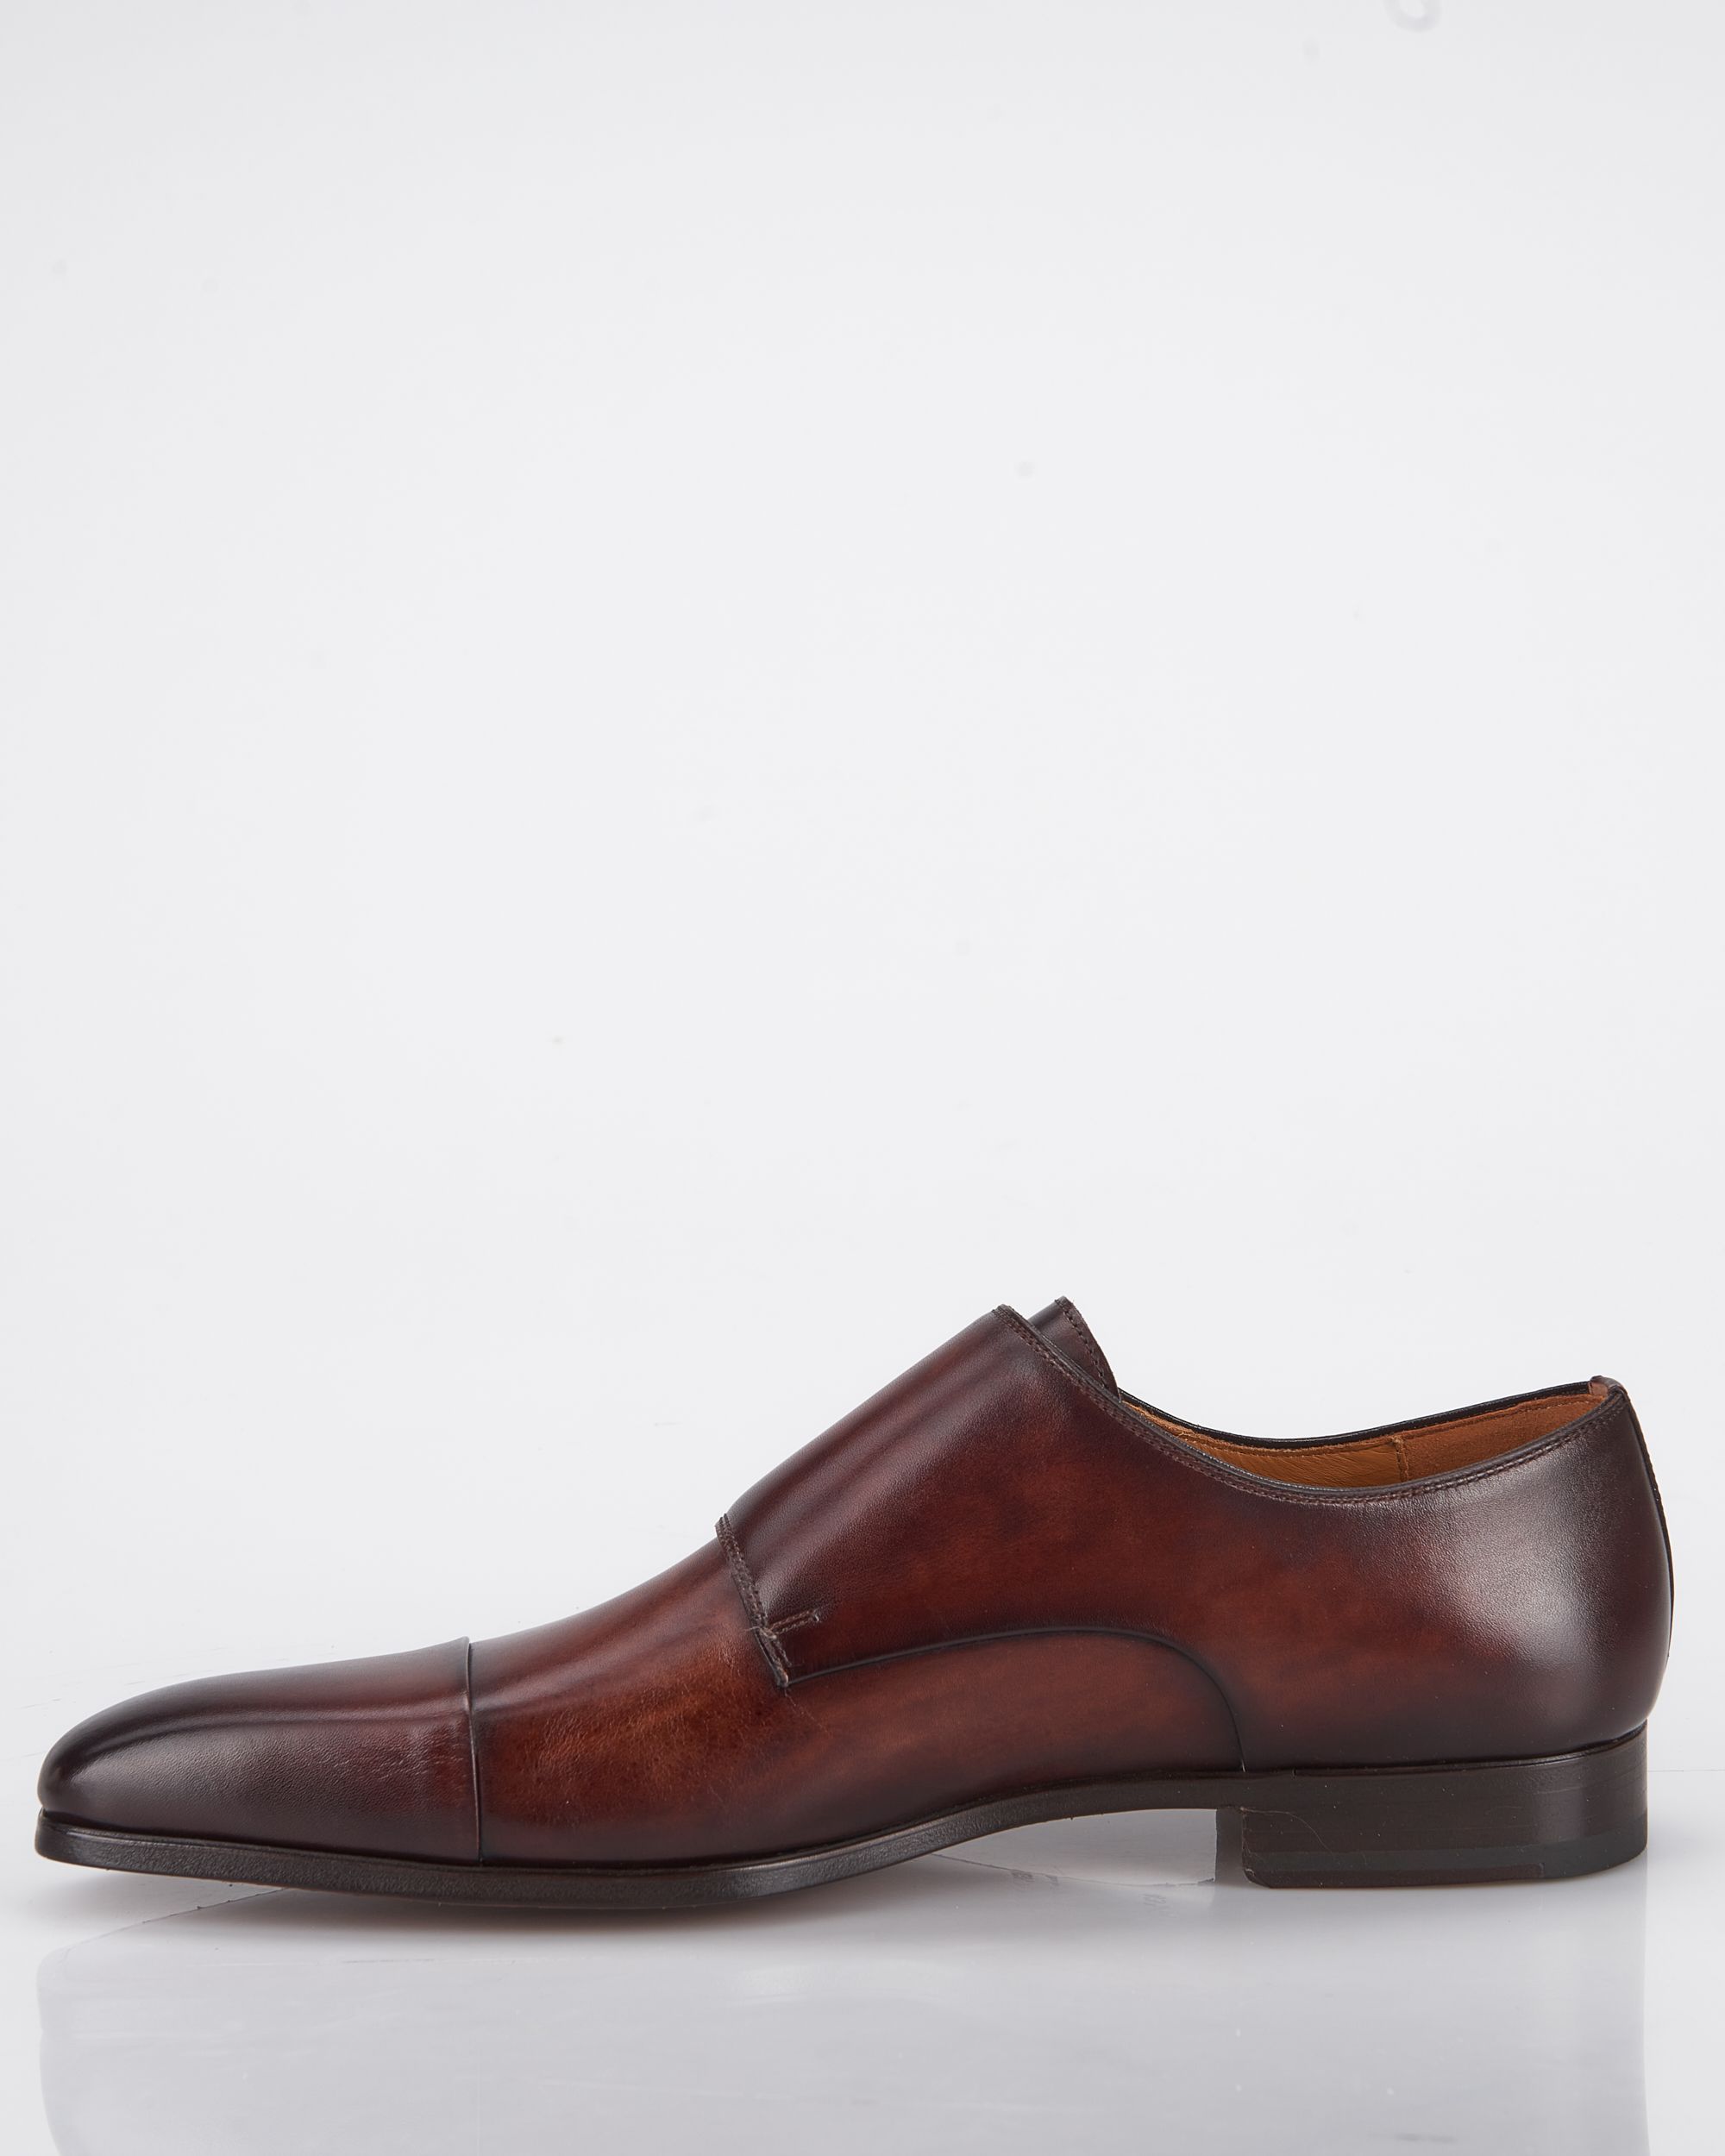 Magnanni Geklede schoenen Donker bruin 084906-001-41